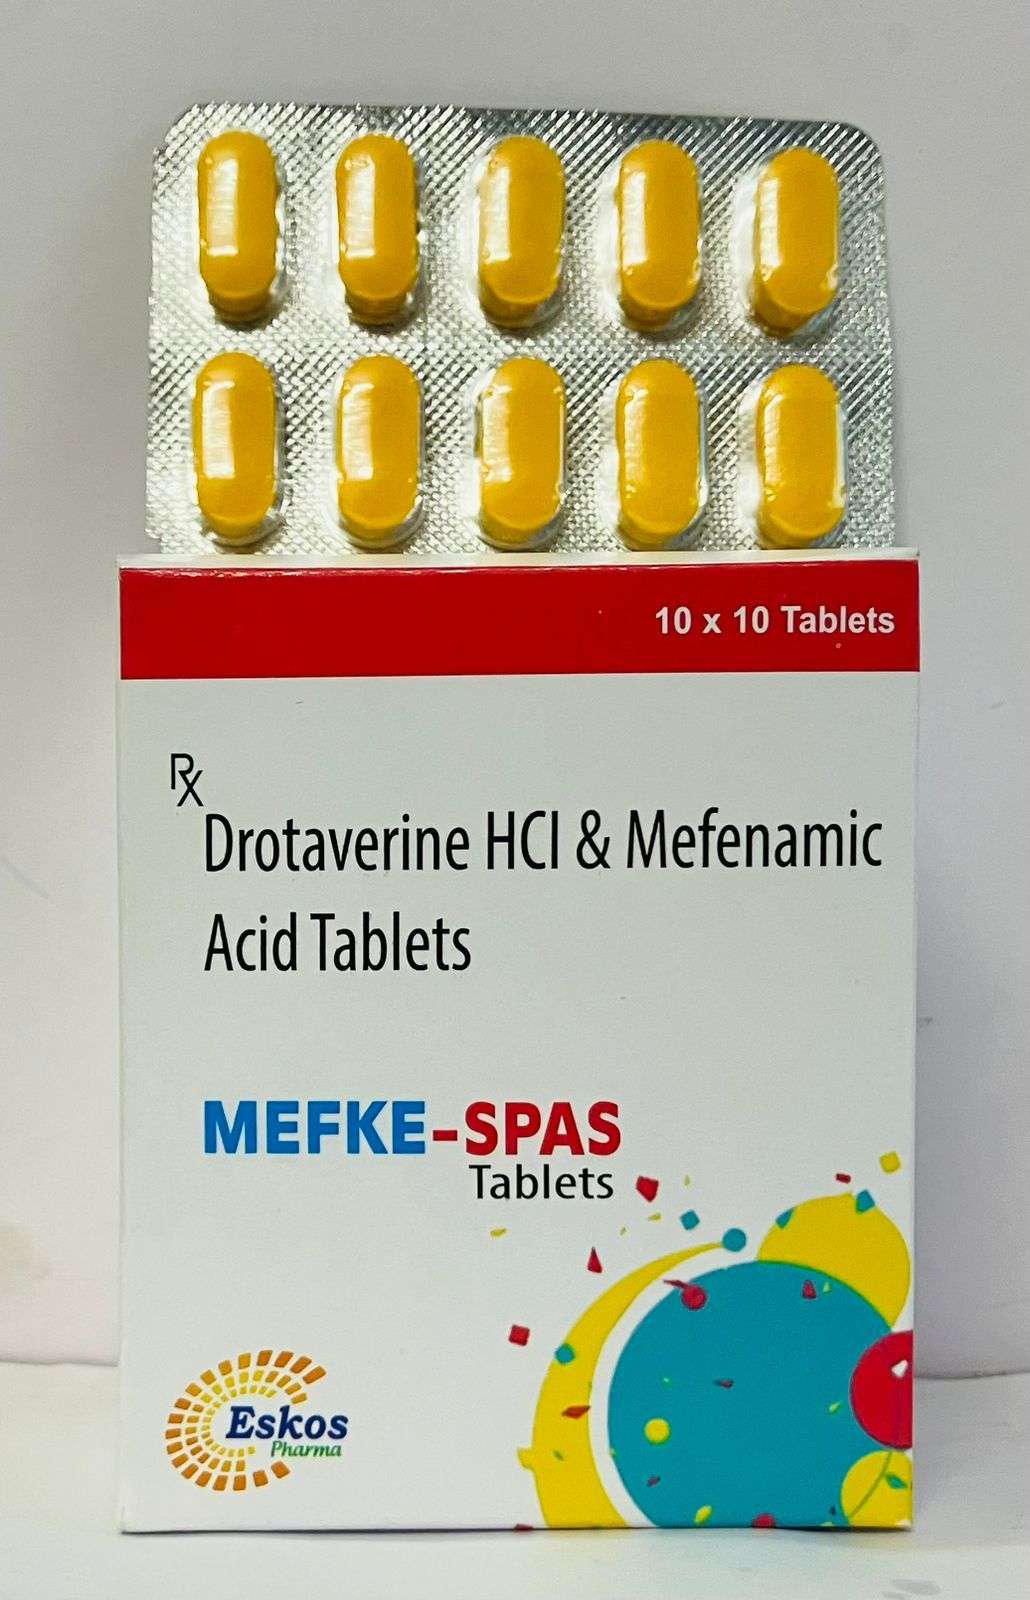 mefenamic acid 250mg +drotaverine hcl 80 mg